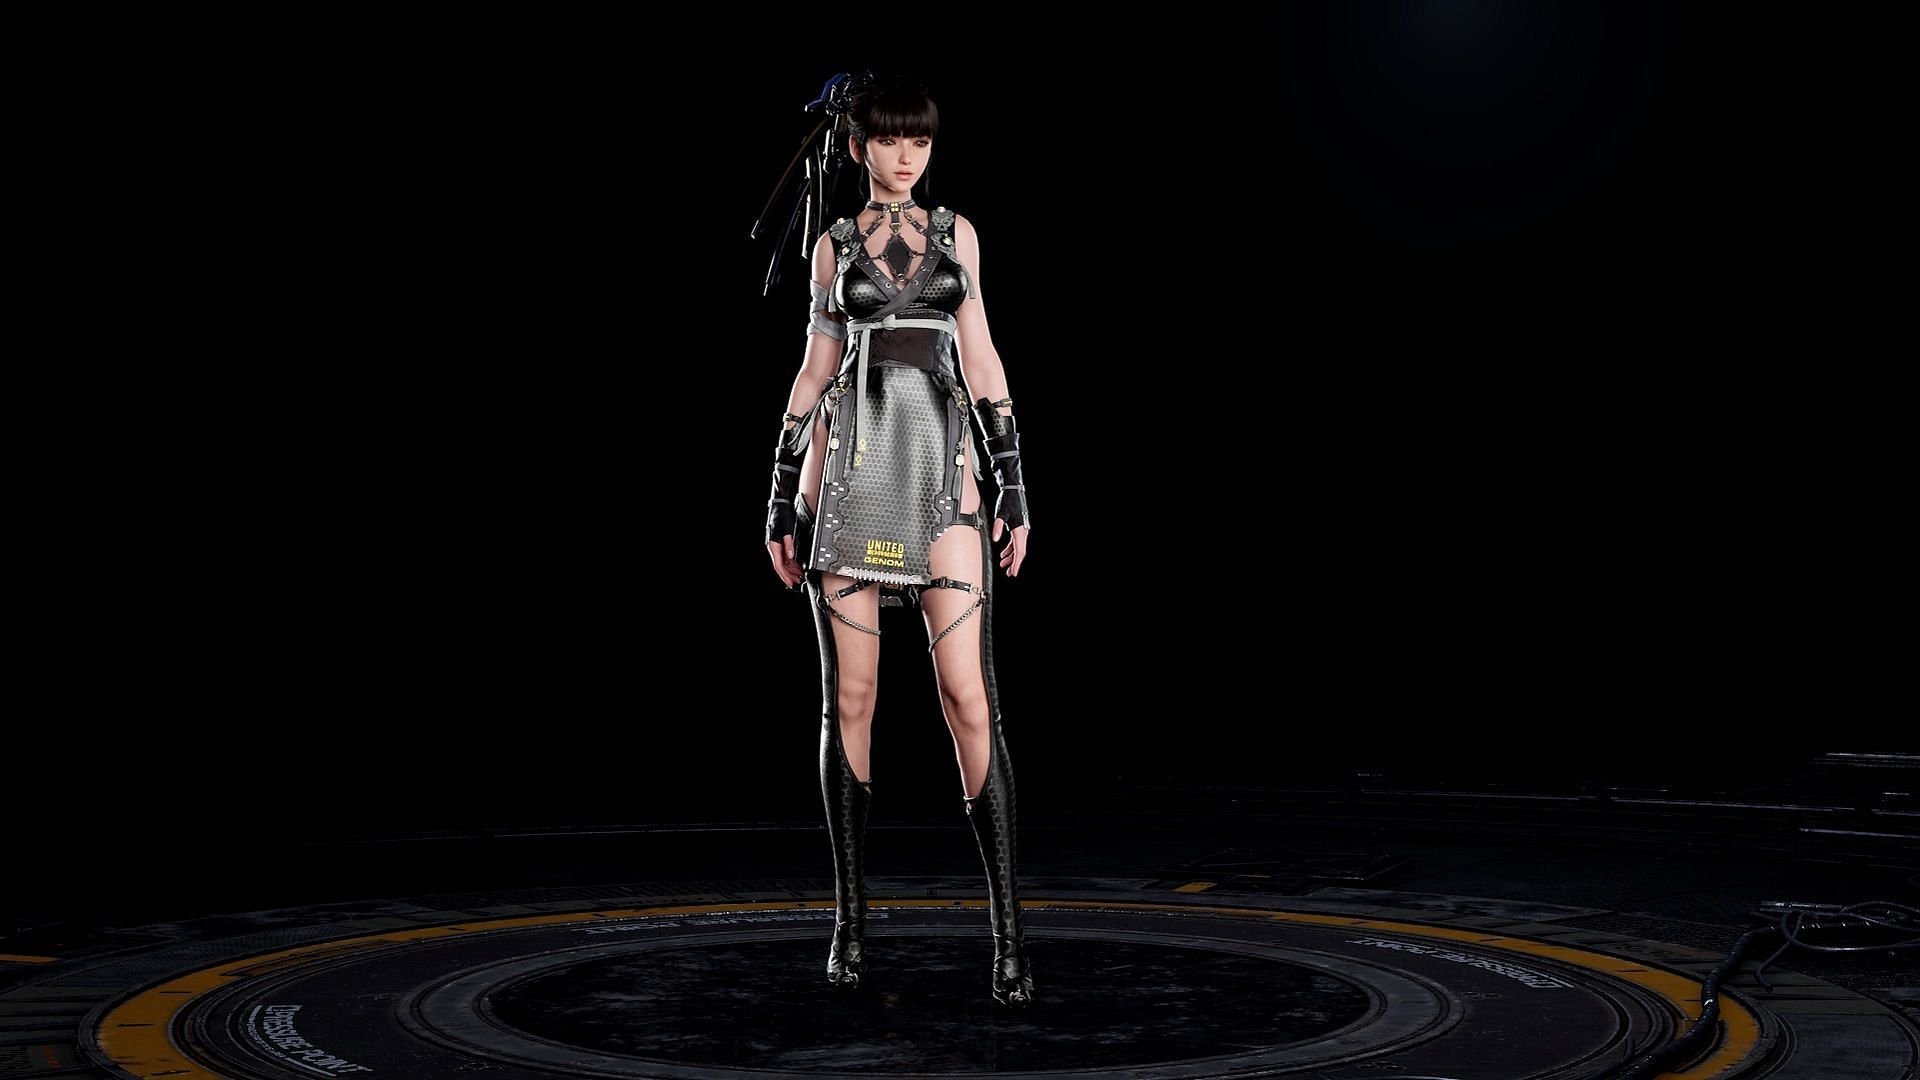 Eve wearing the Black Kunoichi suit in Stellar Blade